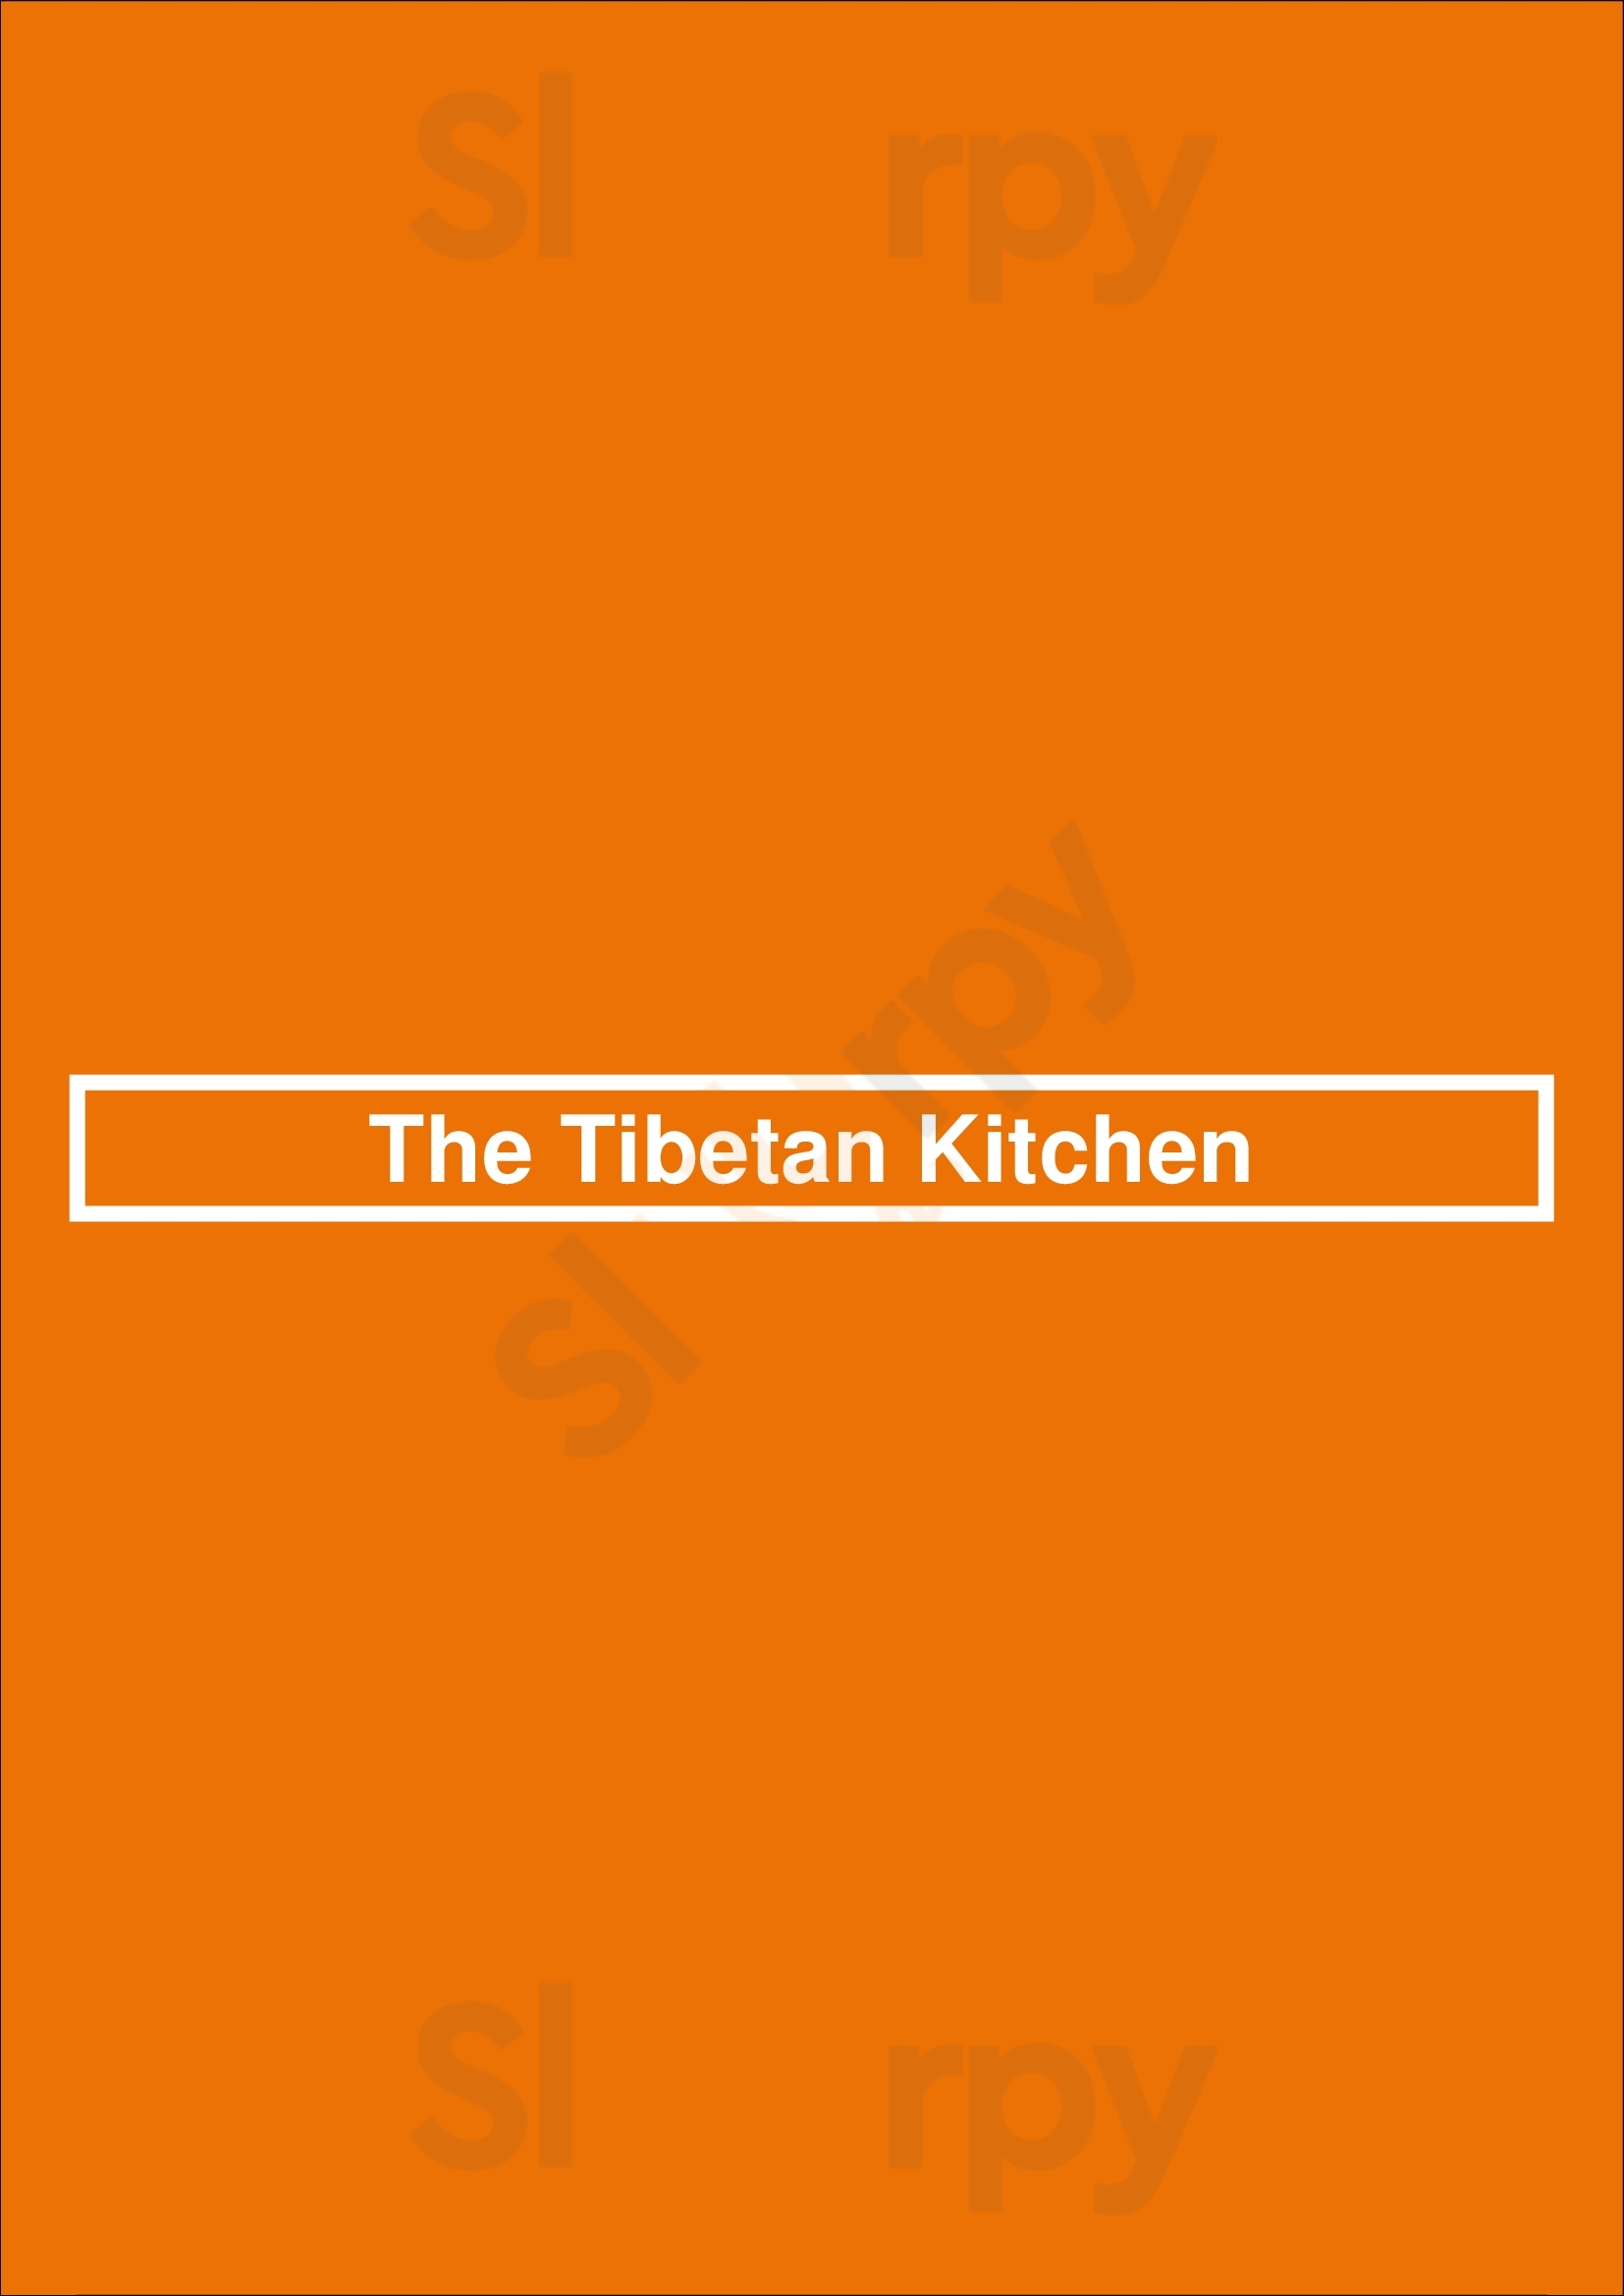 The Tibetan Kitchen Paris Menu - 1